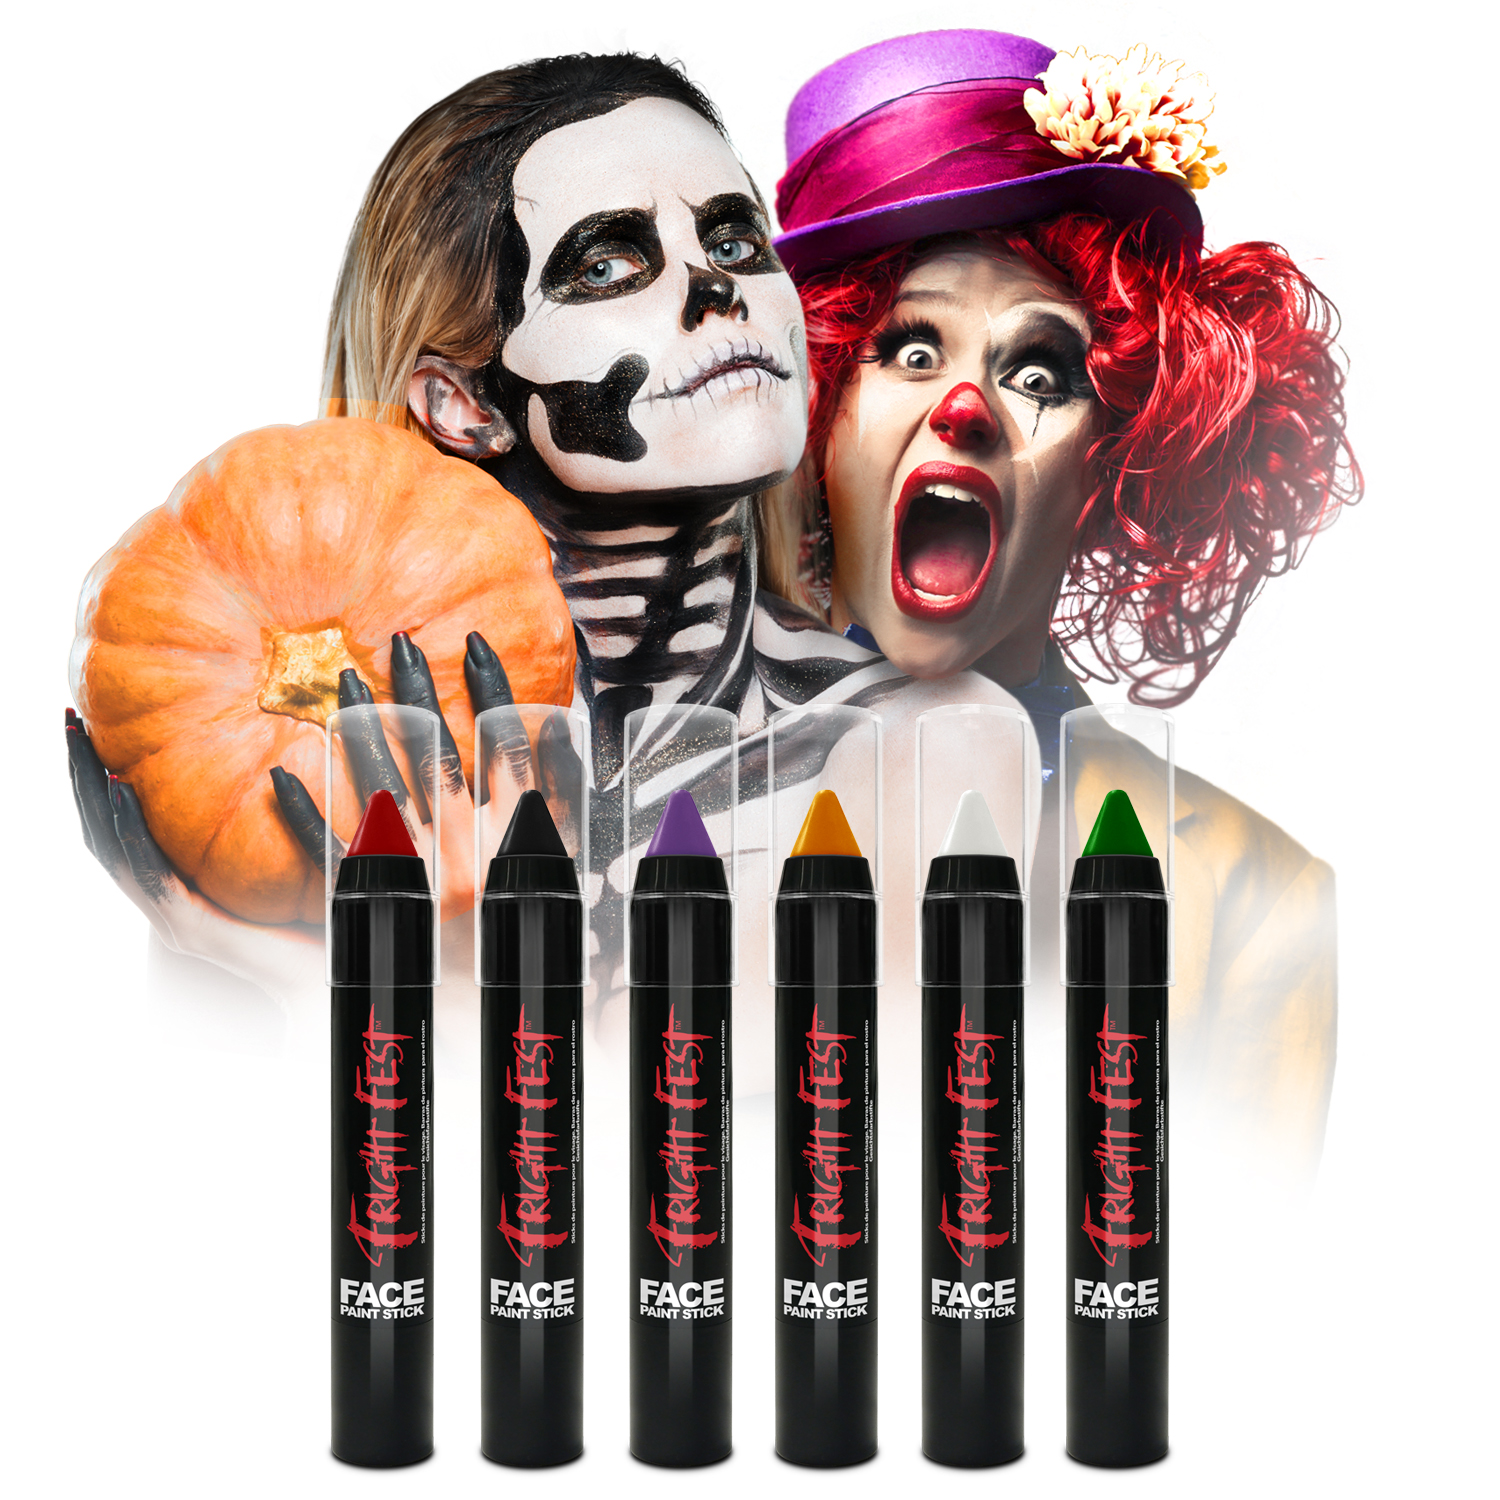 Fright Fest Halloween Face Paint Sticks Range